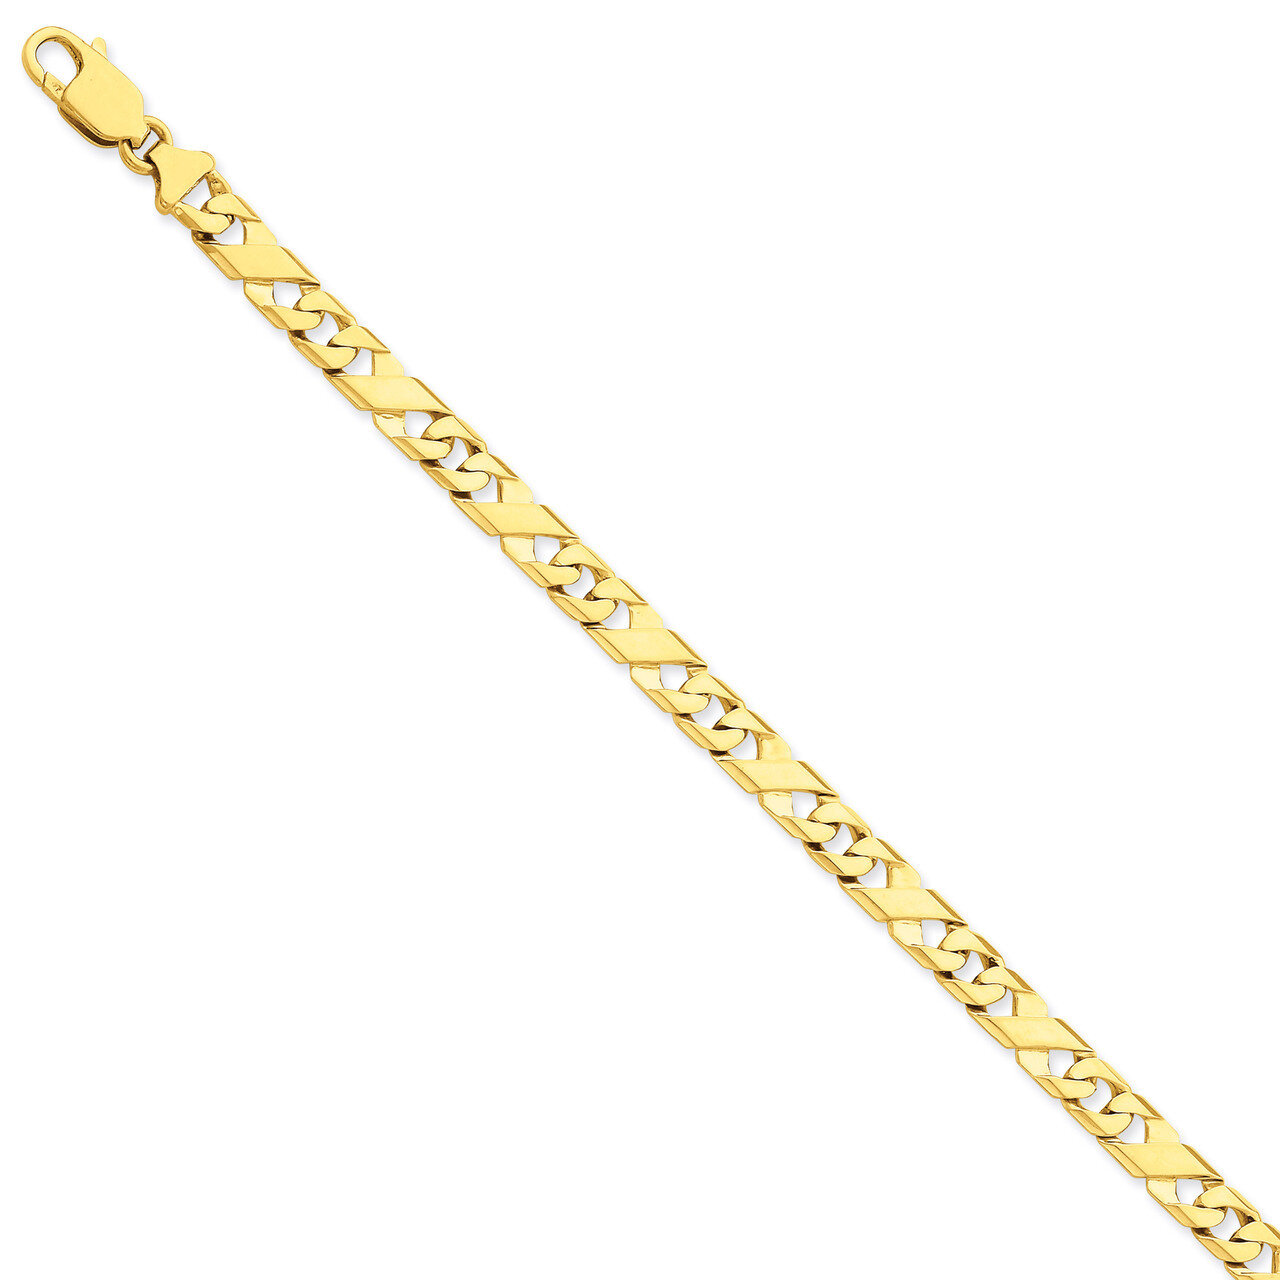 7mm Hand-Polished Fancy Link Chain 18 Inch 14k Gold LK165-18